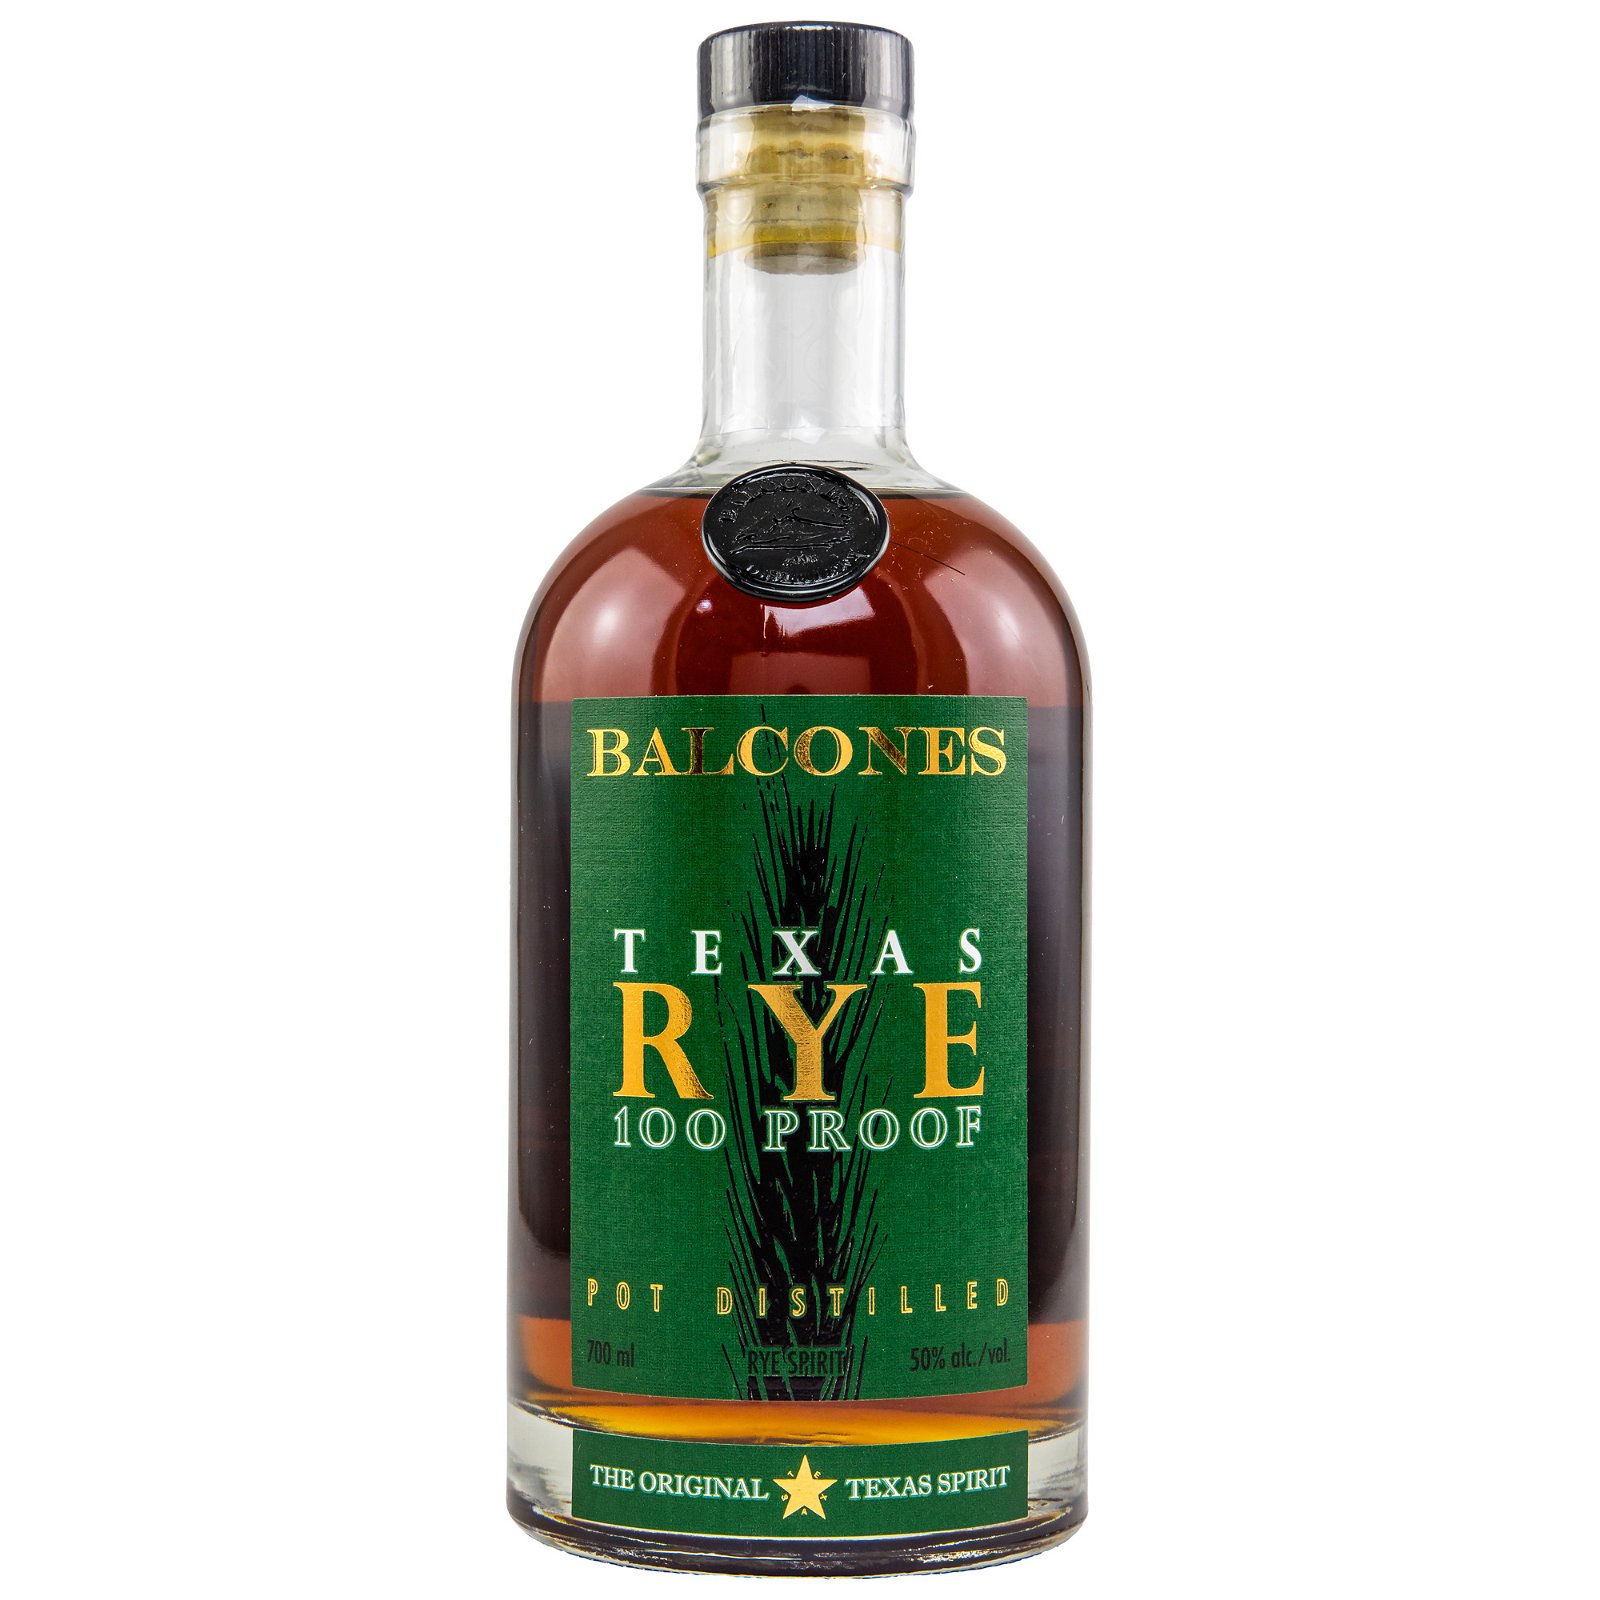 Balcones Texas Rye 100 Proof Rye Spirit